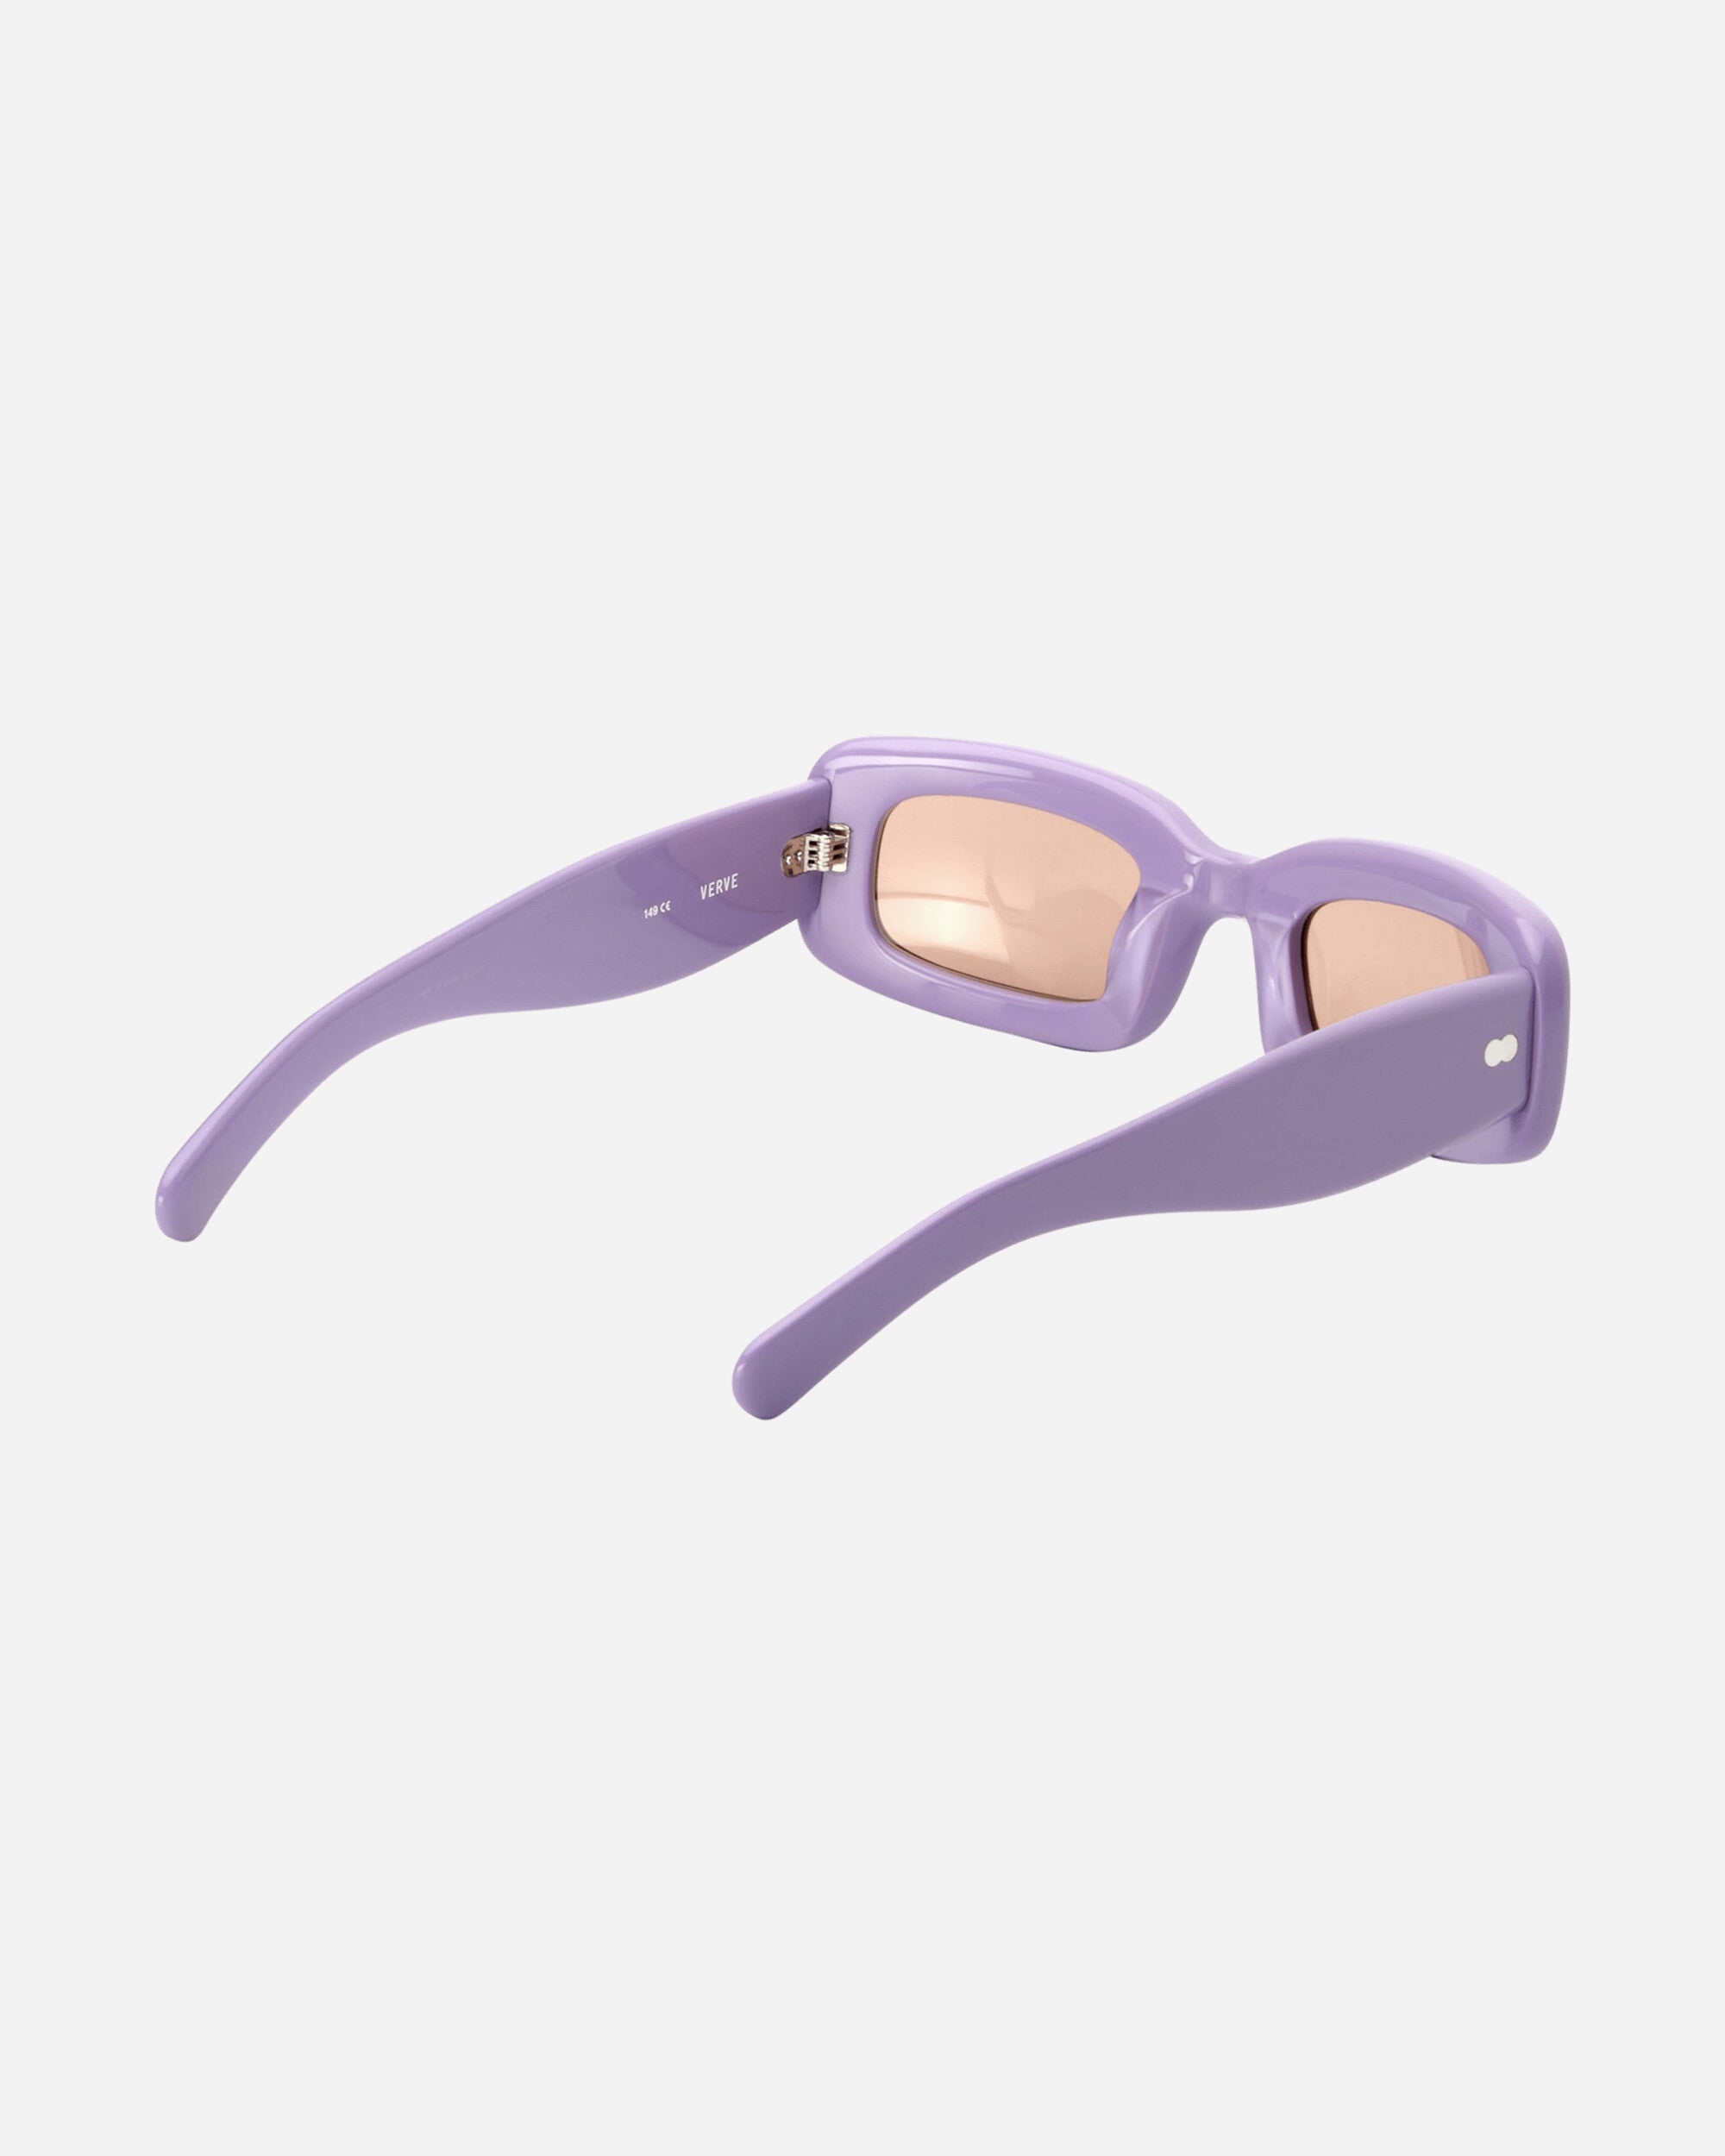 AKILA Verve Inflated Lavender/Brown Eyewear Sunglasses 230647 66